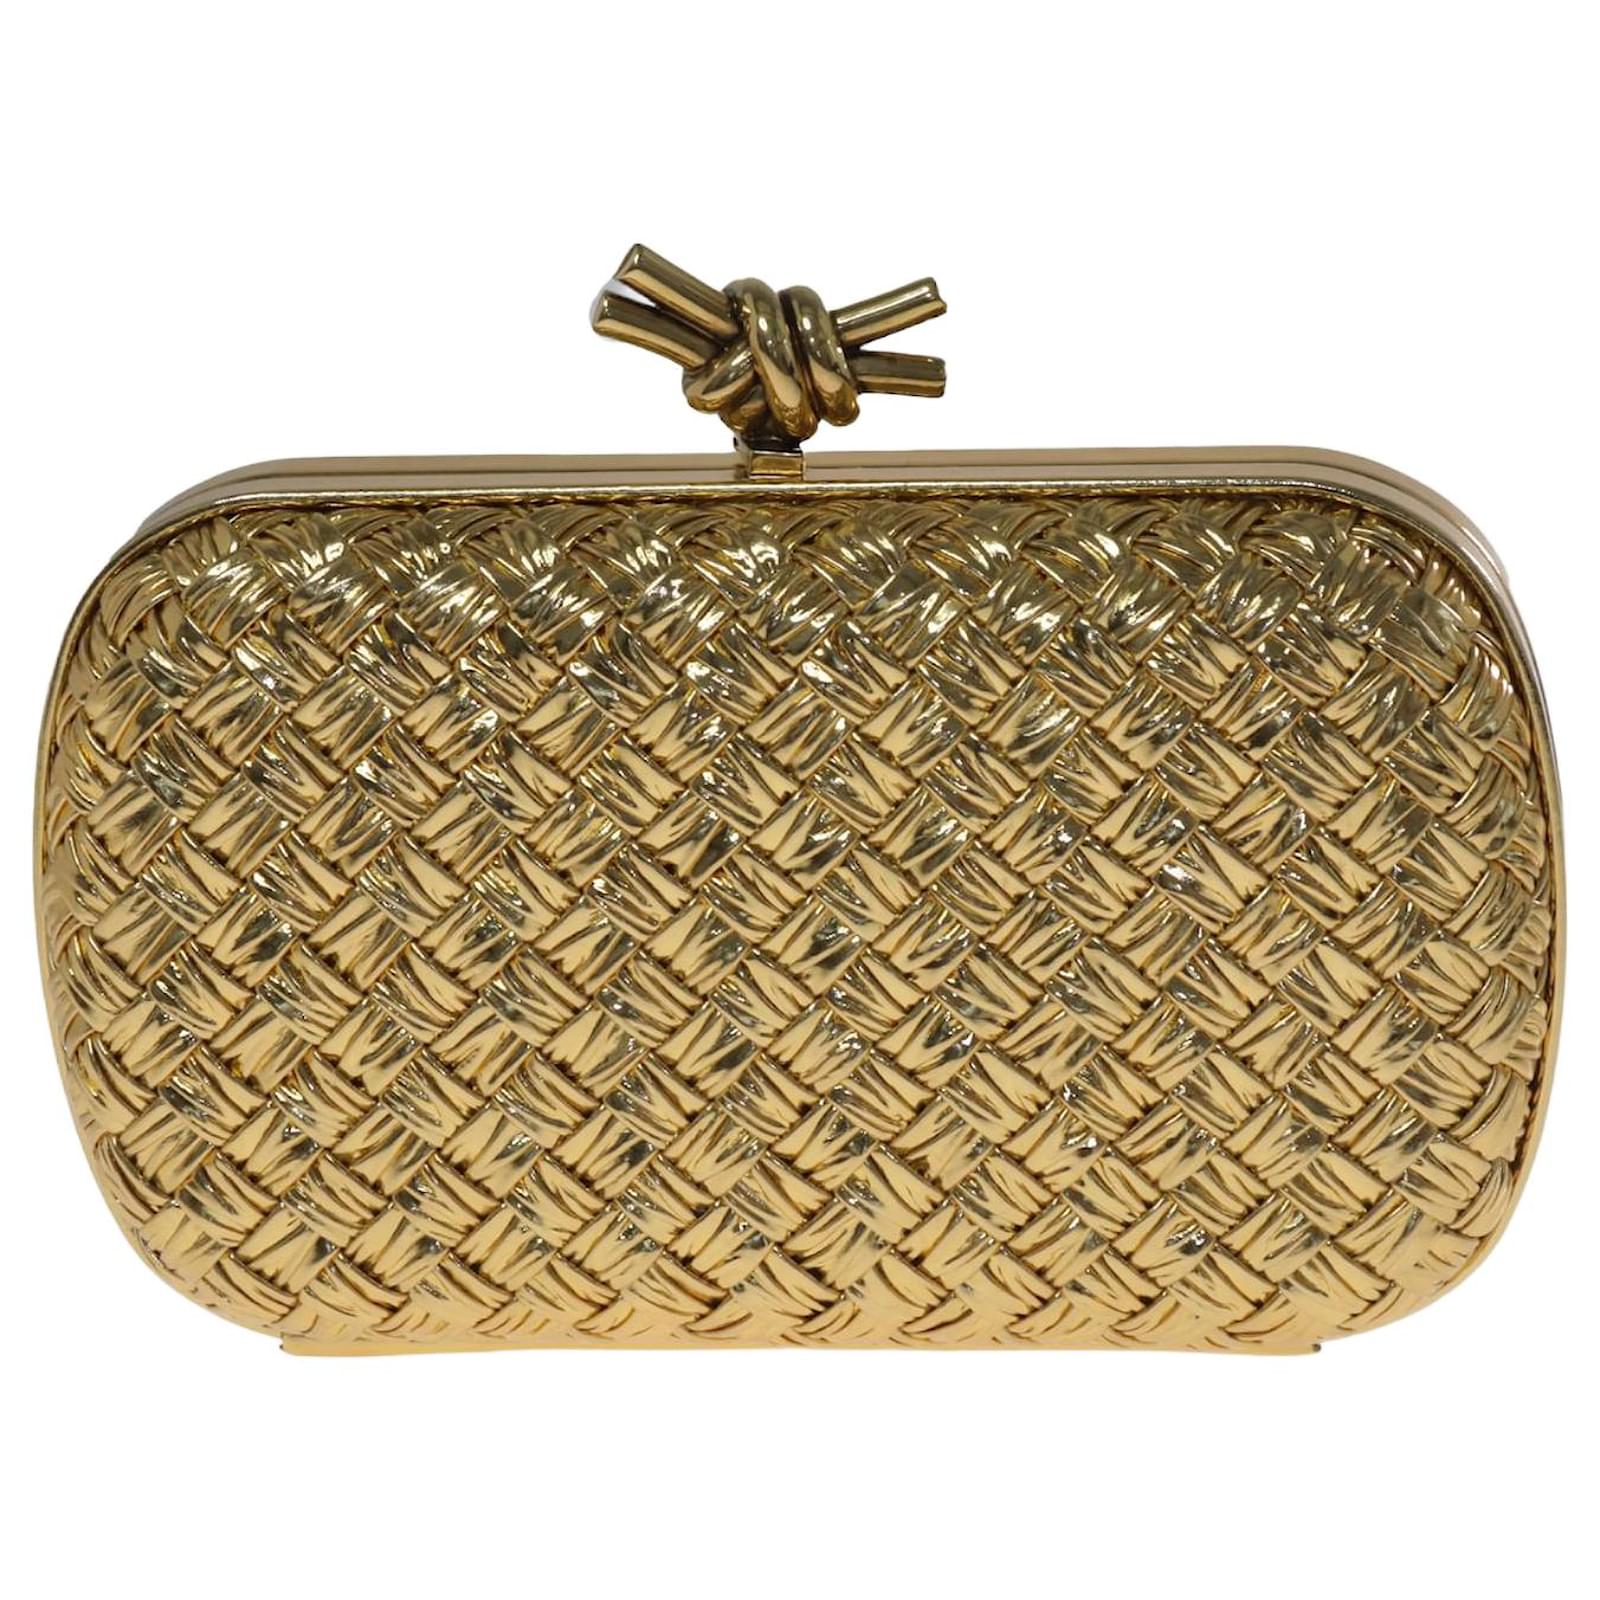 Clutch Bags Bottega Veneta Metallic Gold Knot Minaudiere Pressed Intreccio Laminated Clutch